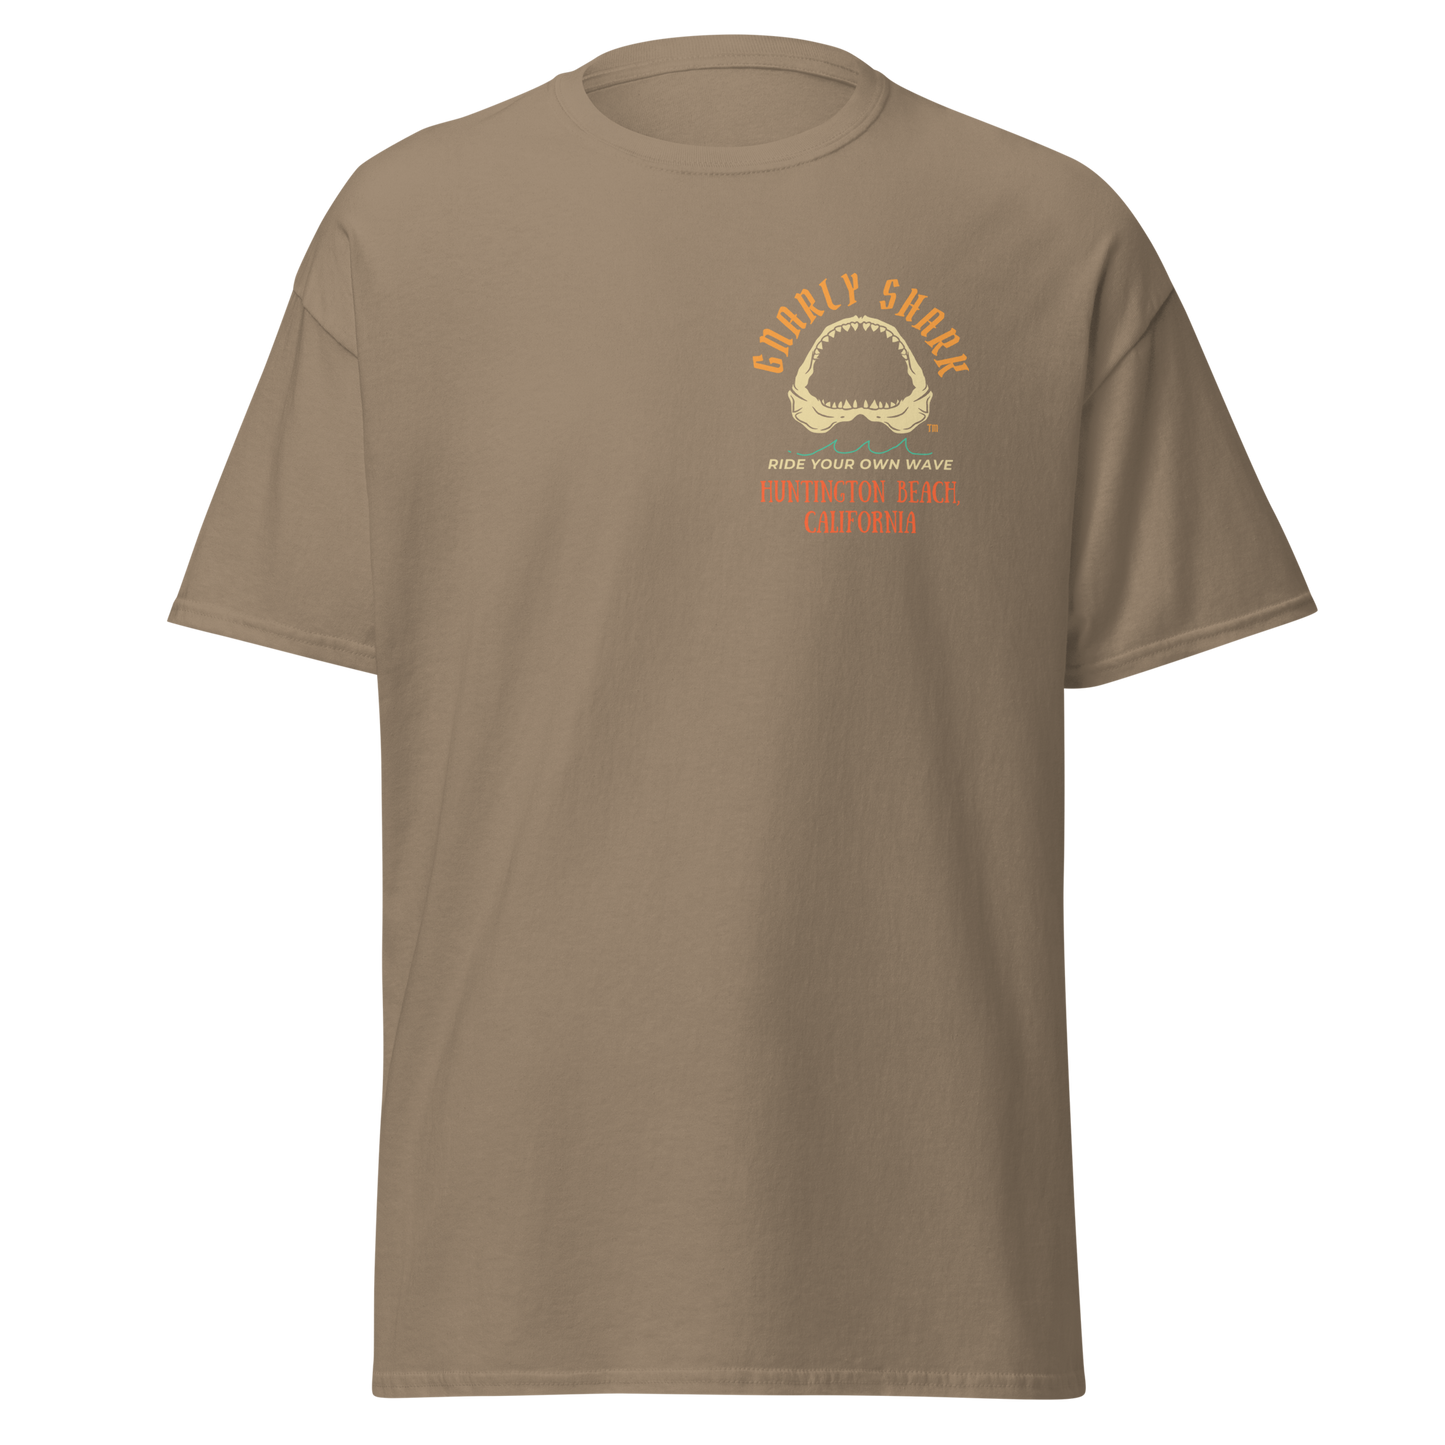 Gnarly Shark Huntington Beach California T-Shirt - Front / Back - Gildan classic 5000